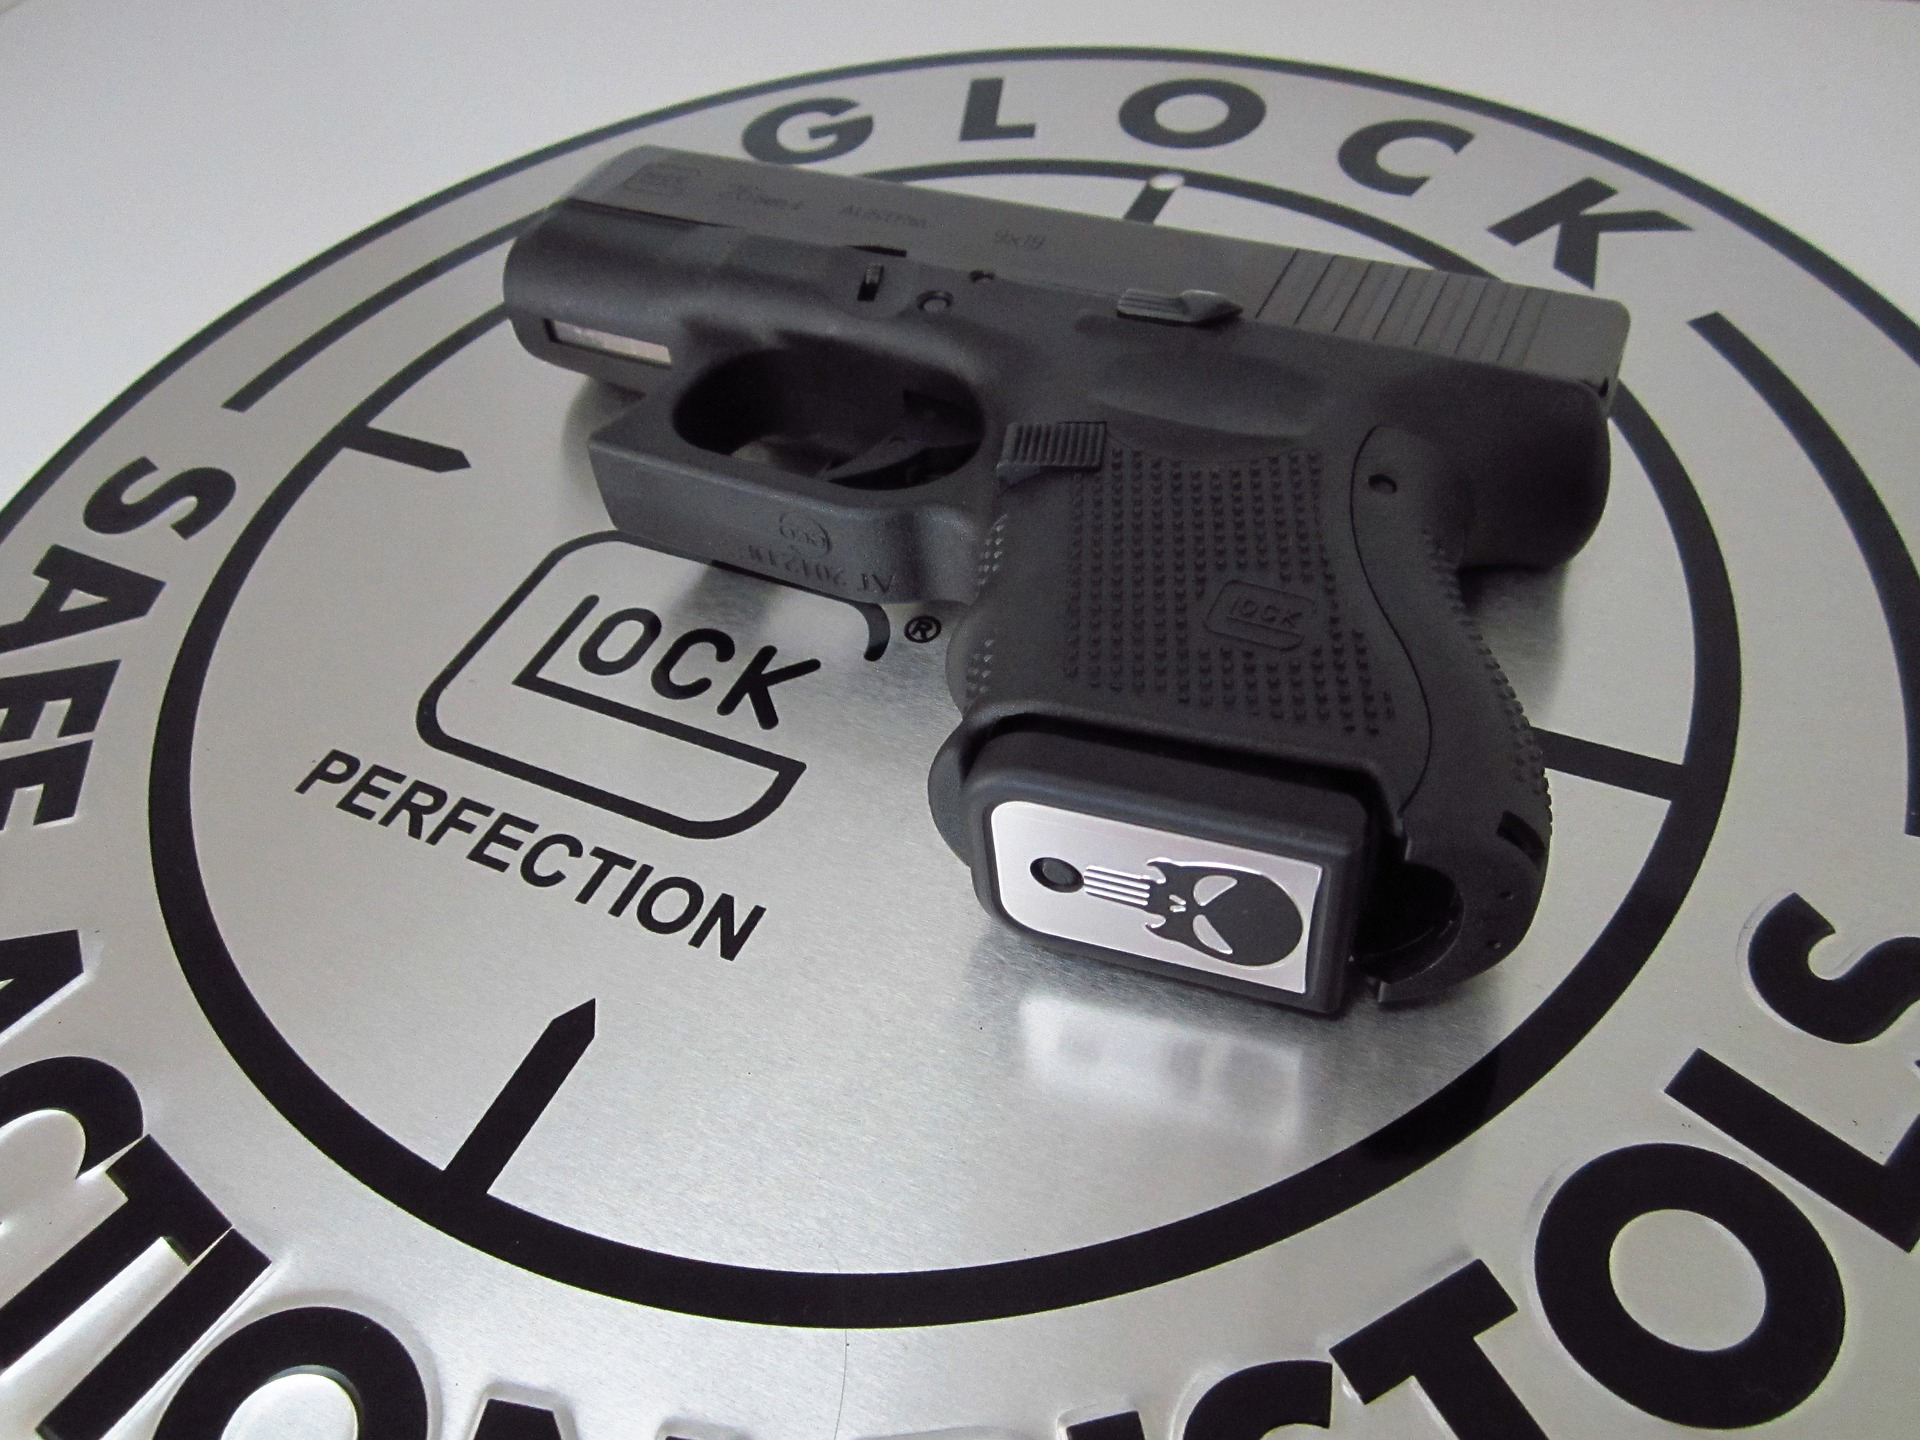 Glock Pistol